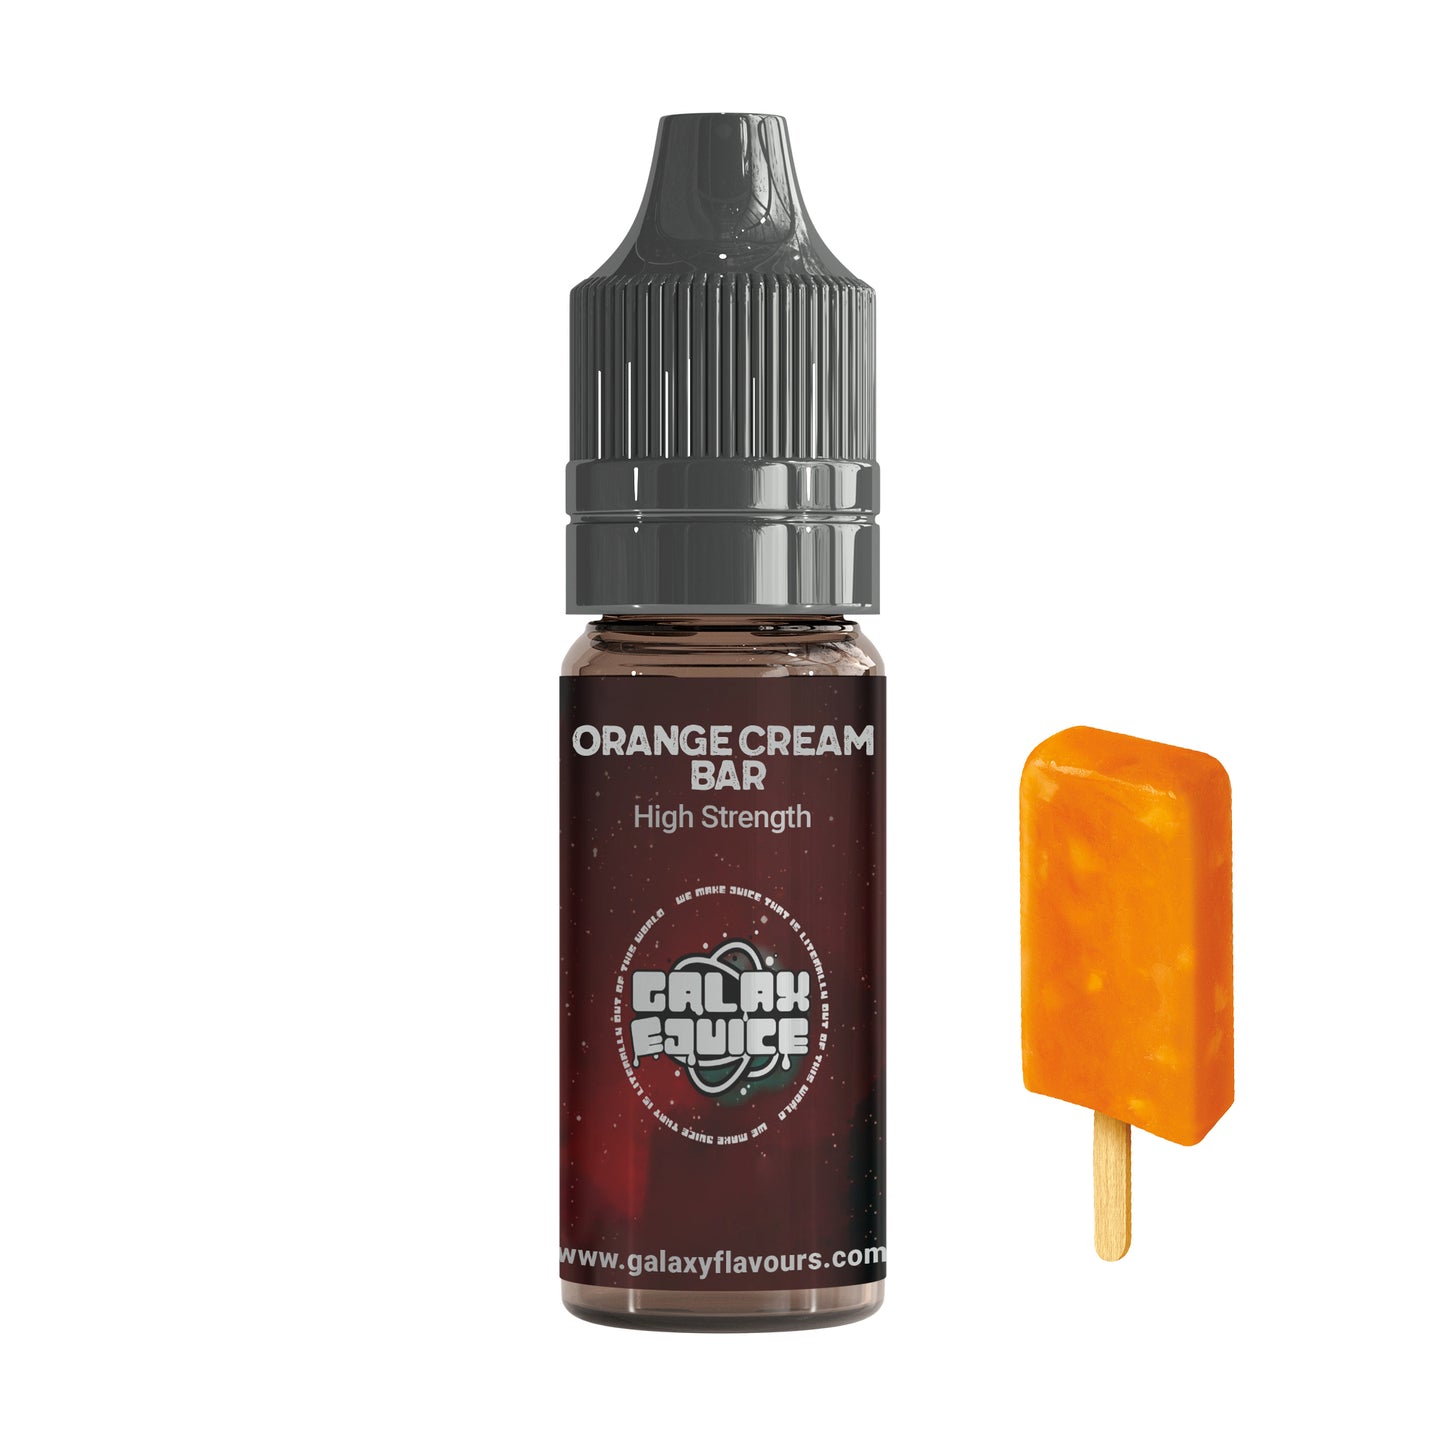 Orange Cream Bar High Strength Professional Flavouring.